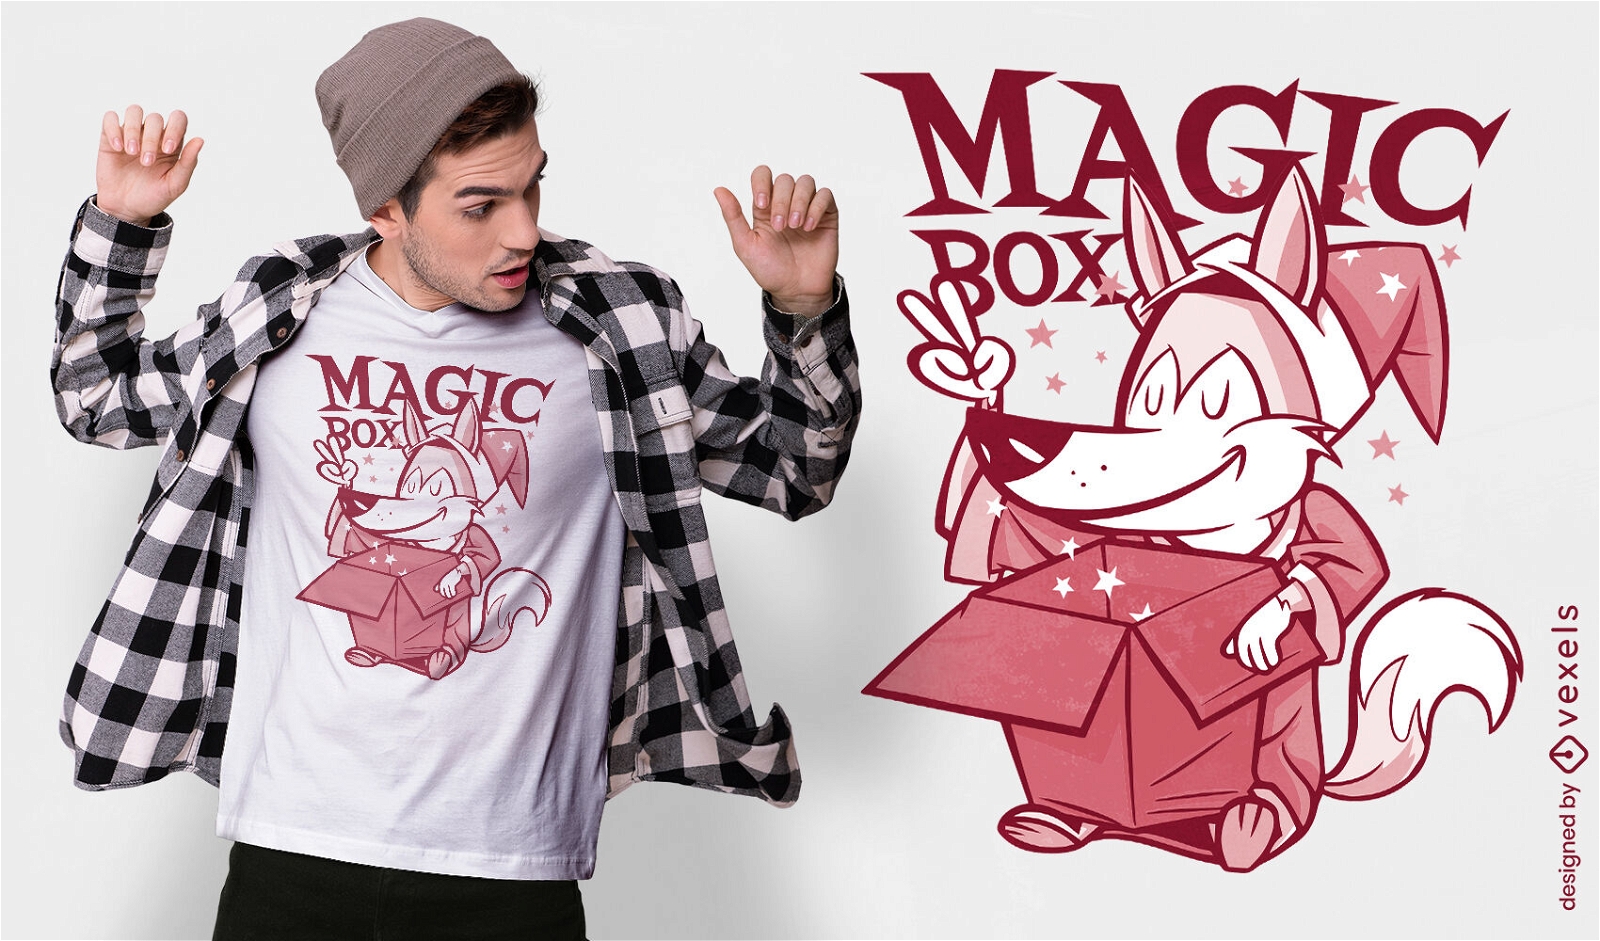 Magic box fox retro cartoon t-shirt design